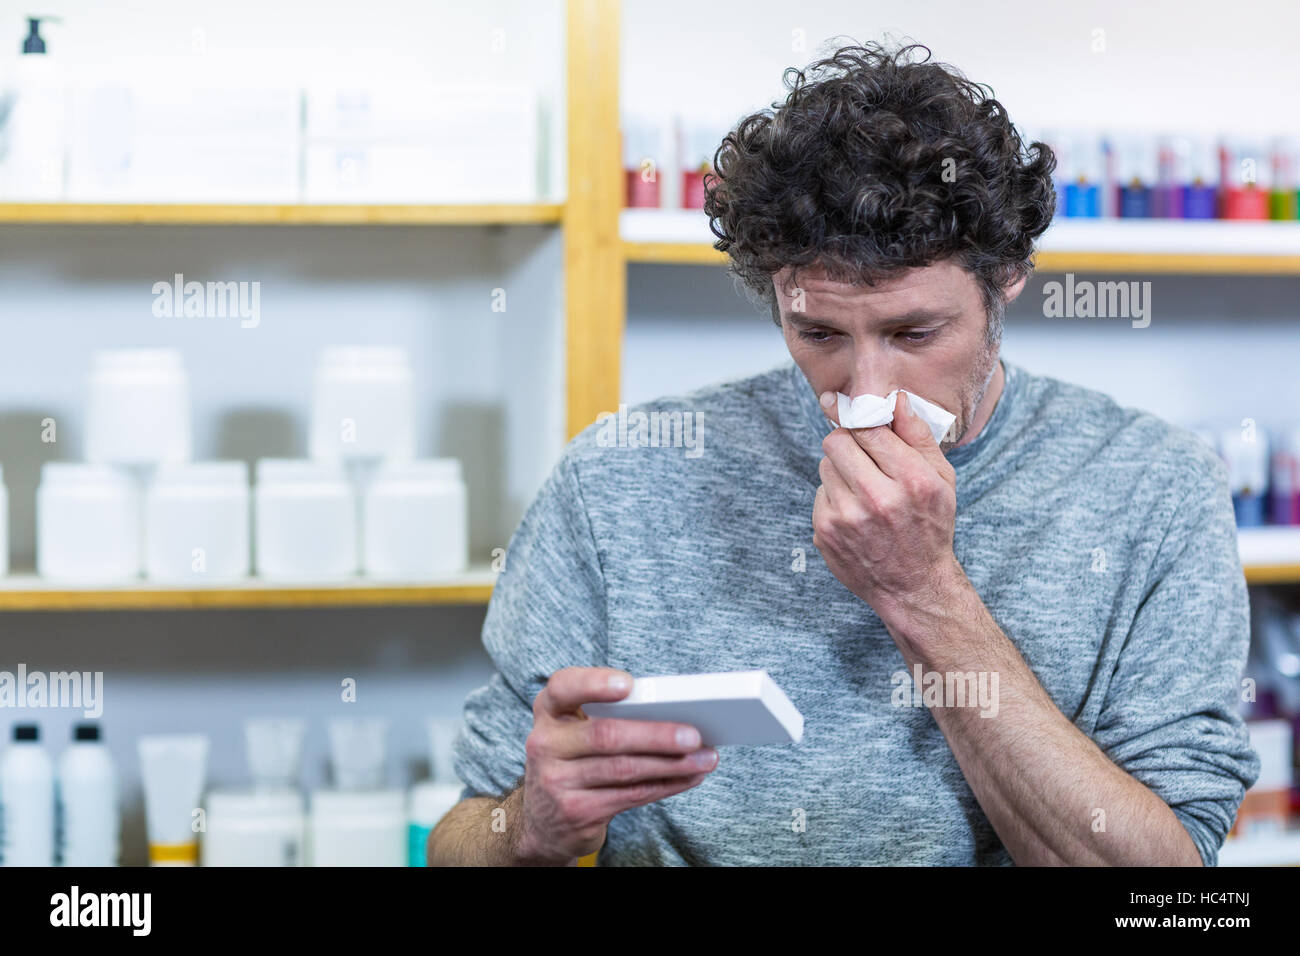 Customer checking medicine box while sneezing Stock Photo